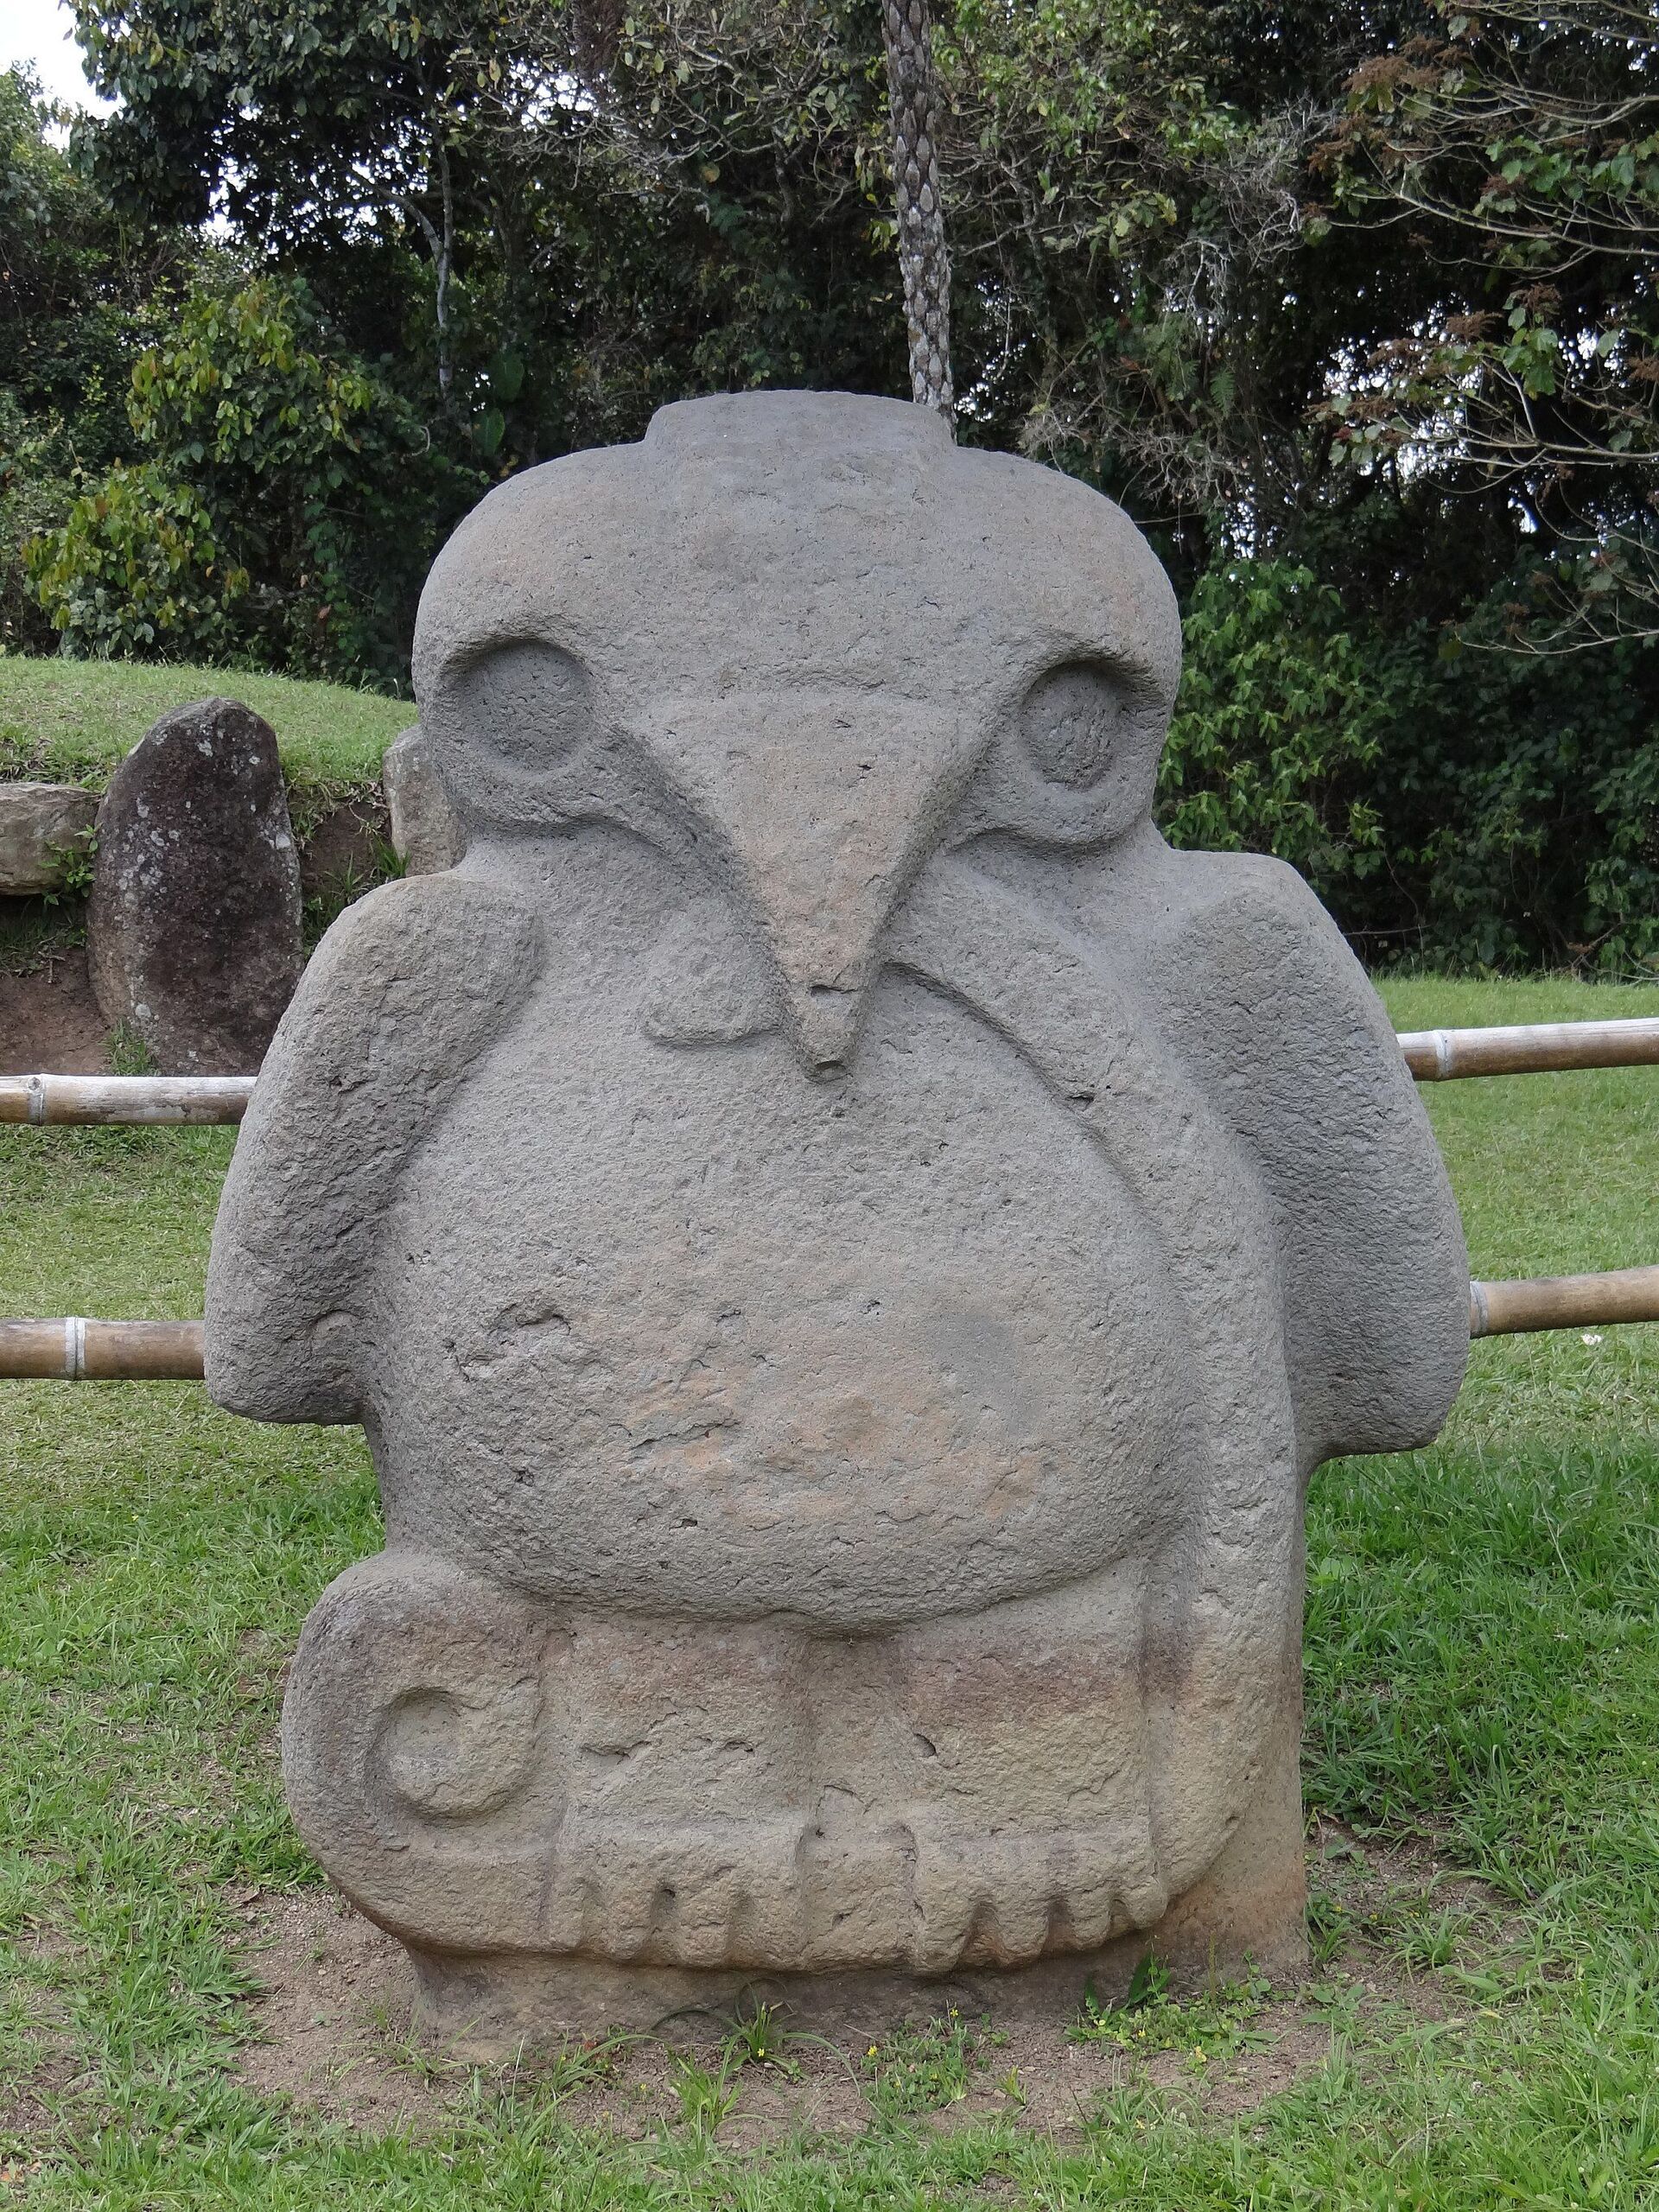 Estatua del Parque Nacional Arqueológico de San Agustín, Colombia  - Sputnik Mundo, 1920, 11.02.2021